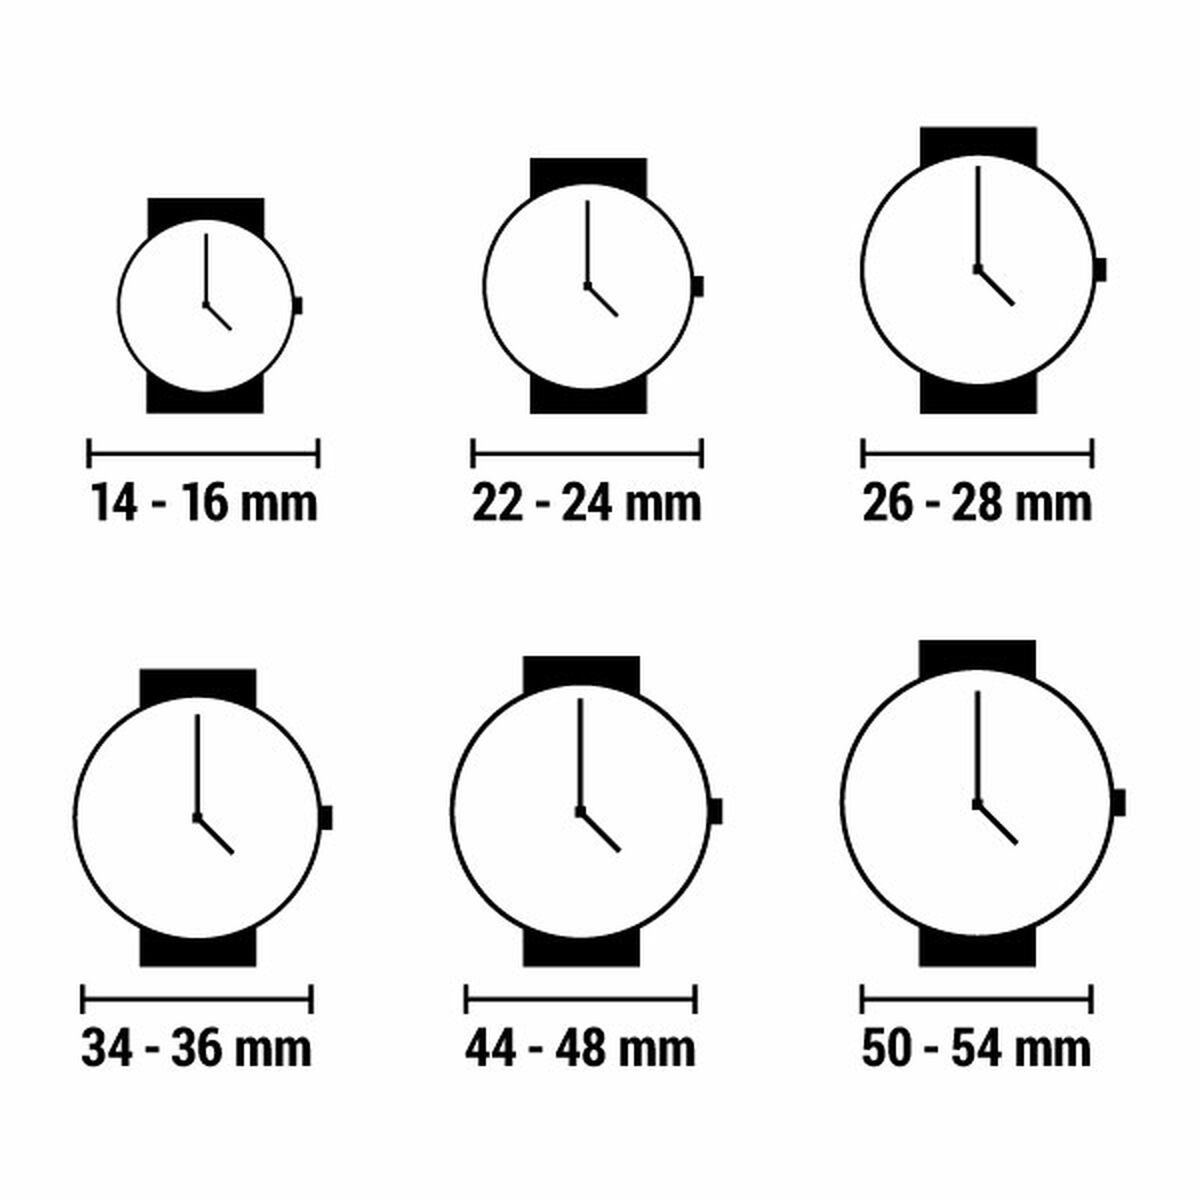 Horloge Dames Mark Maddox MM1007-87 (Ø 38 mm)